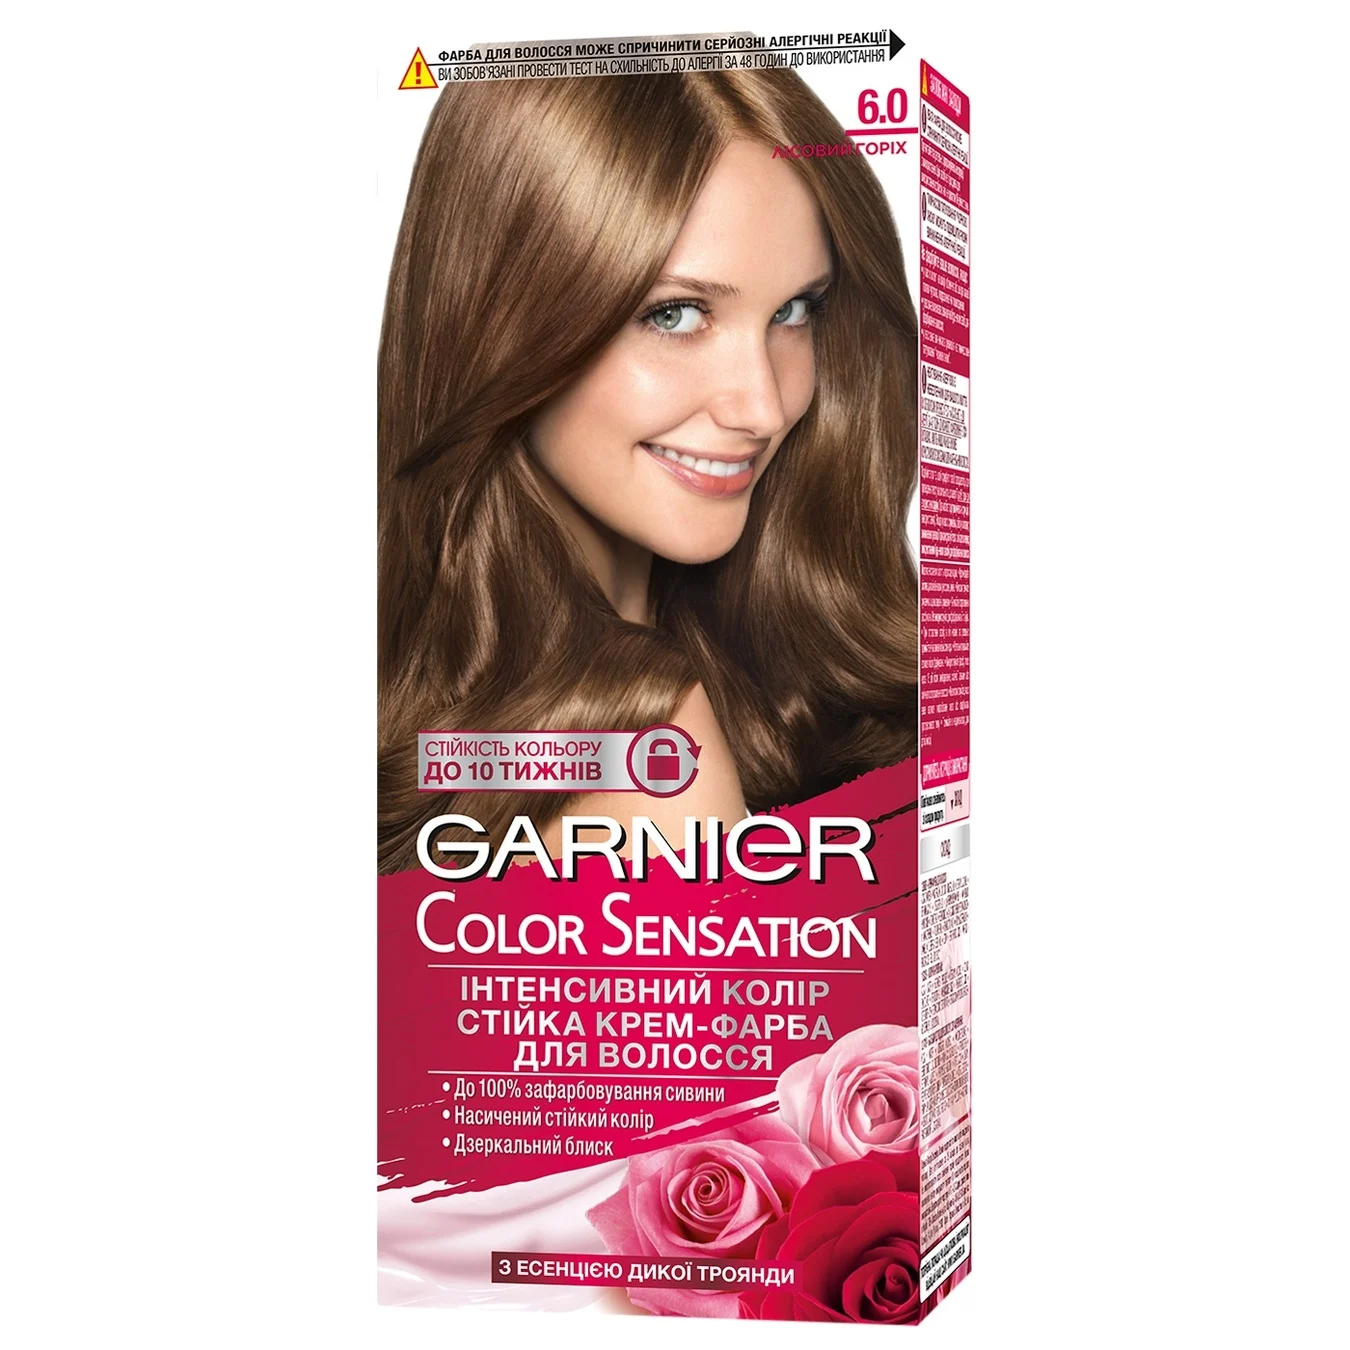 Hair dye Garnier Color Sensation 6.0 Intense color